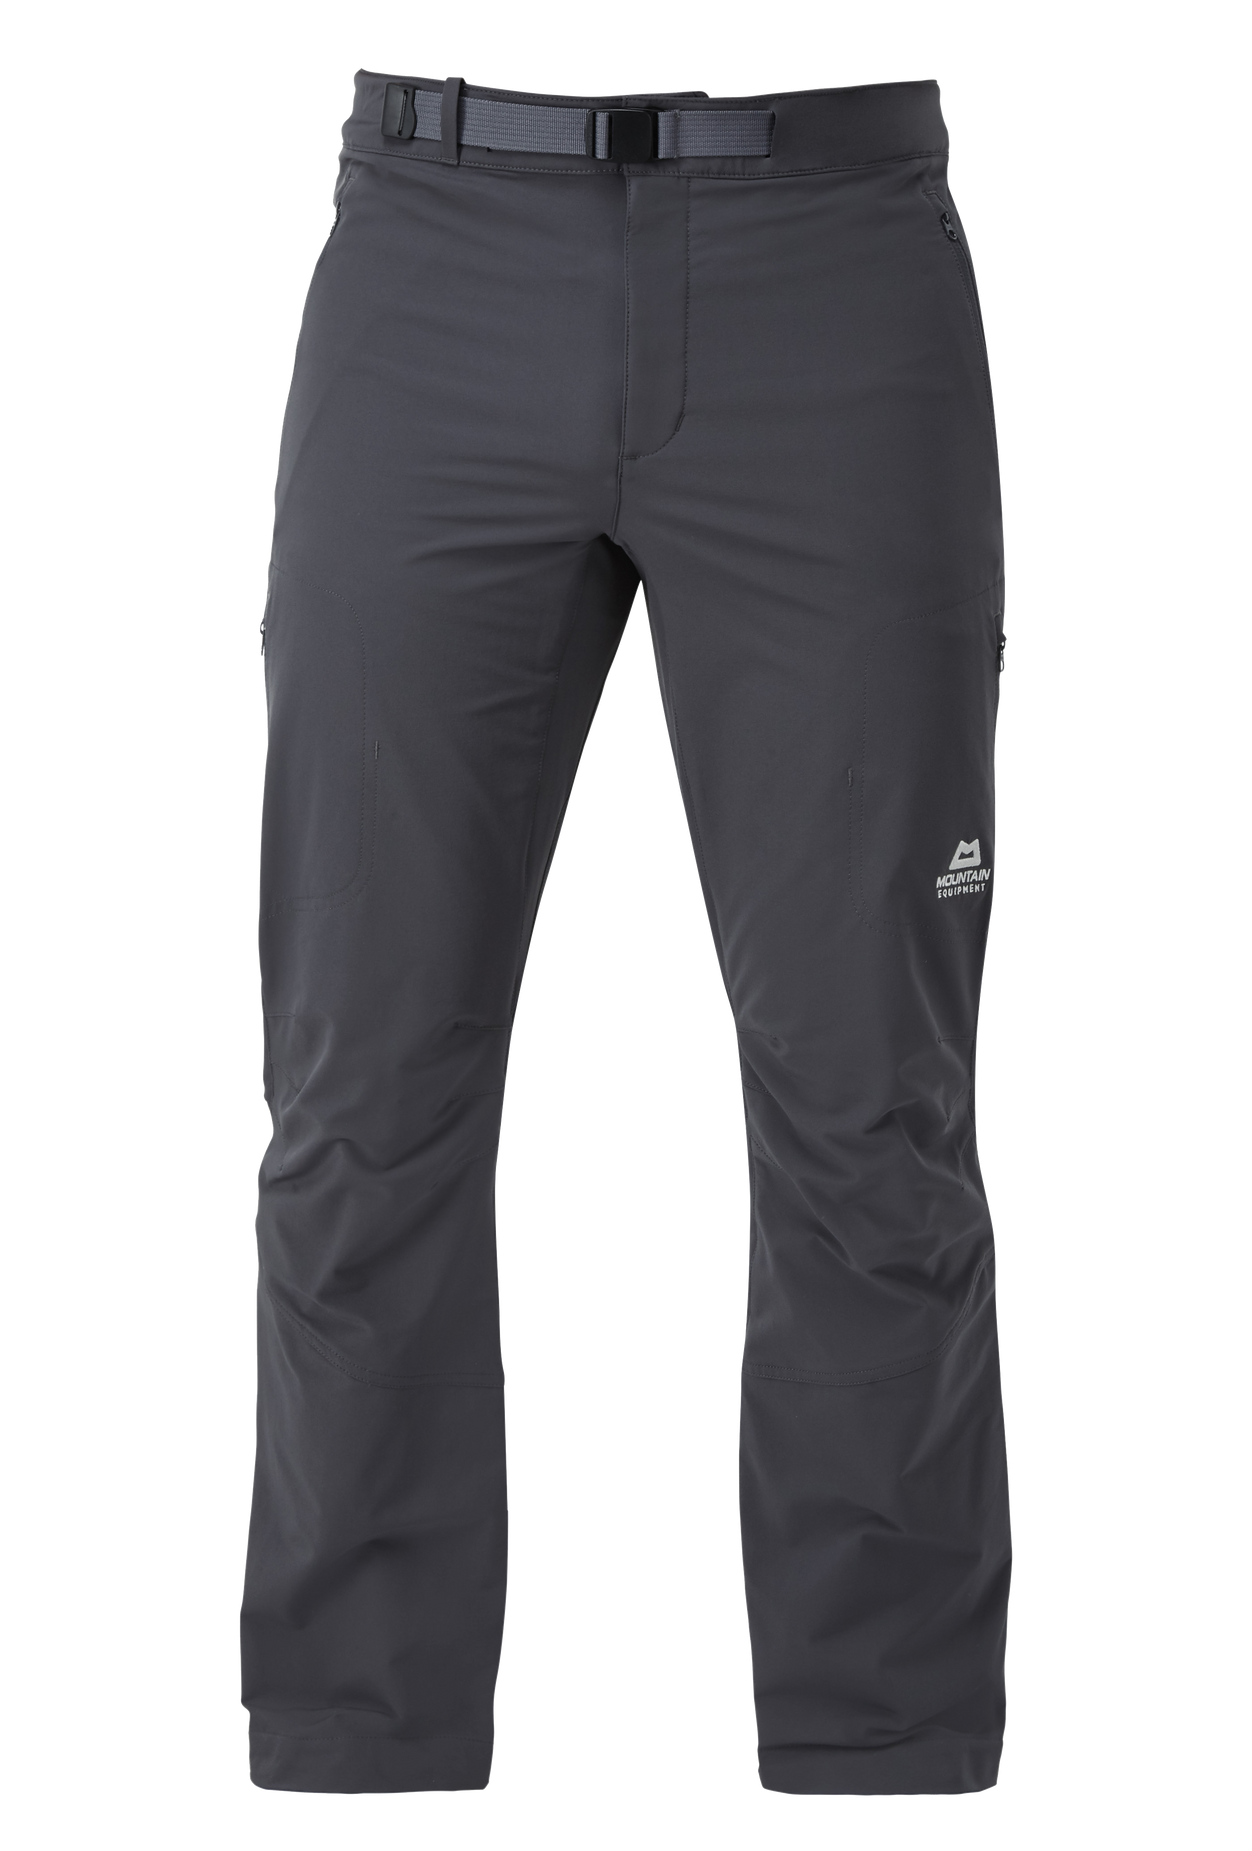 Mountain equipment pánské softshellové kalhoty Ibex Mountain Mens Pant - prodloužené Barva: Anvil Grey, Velikost: 36/XL